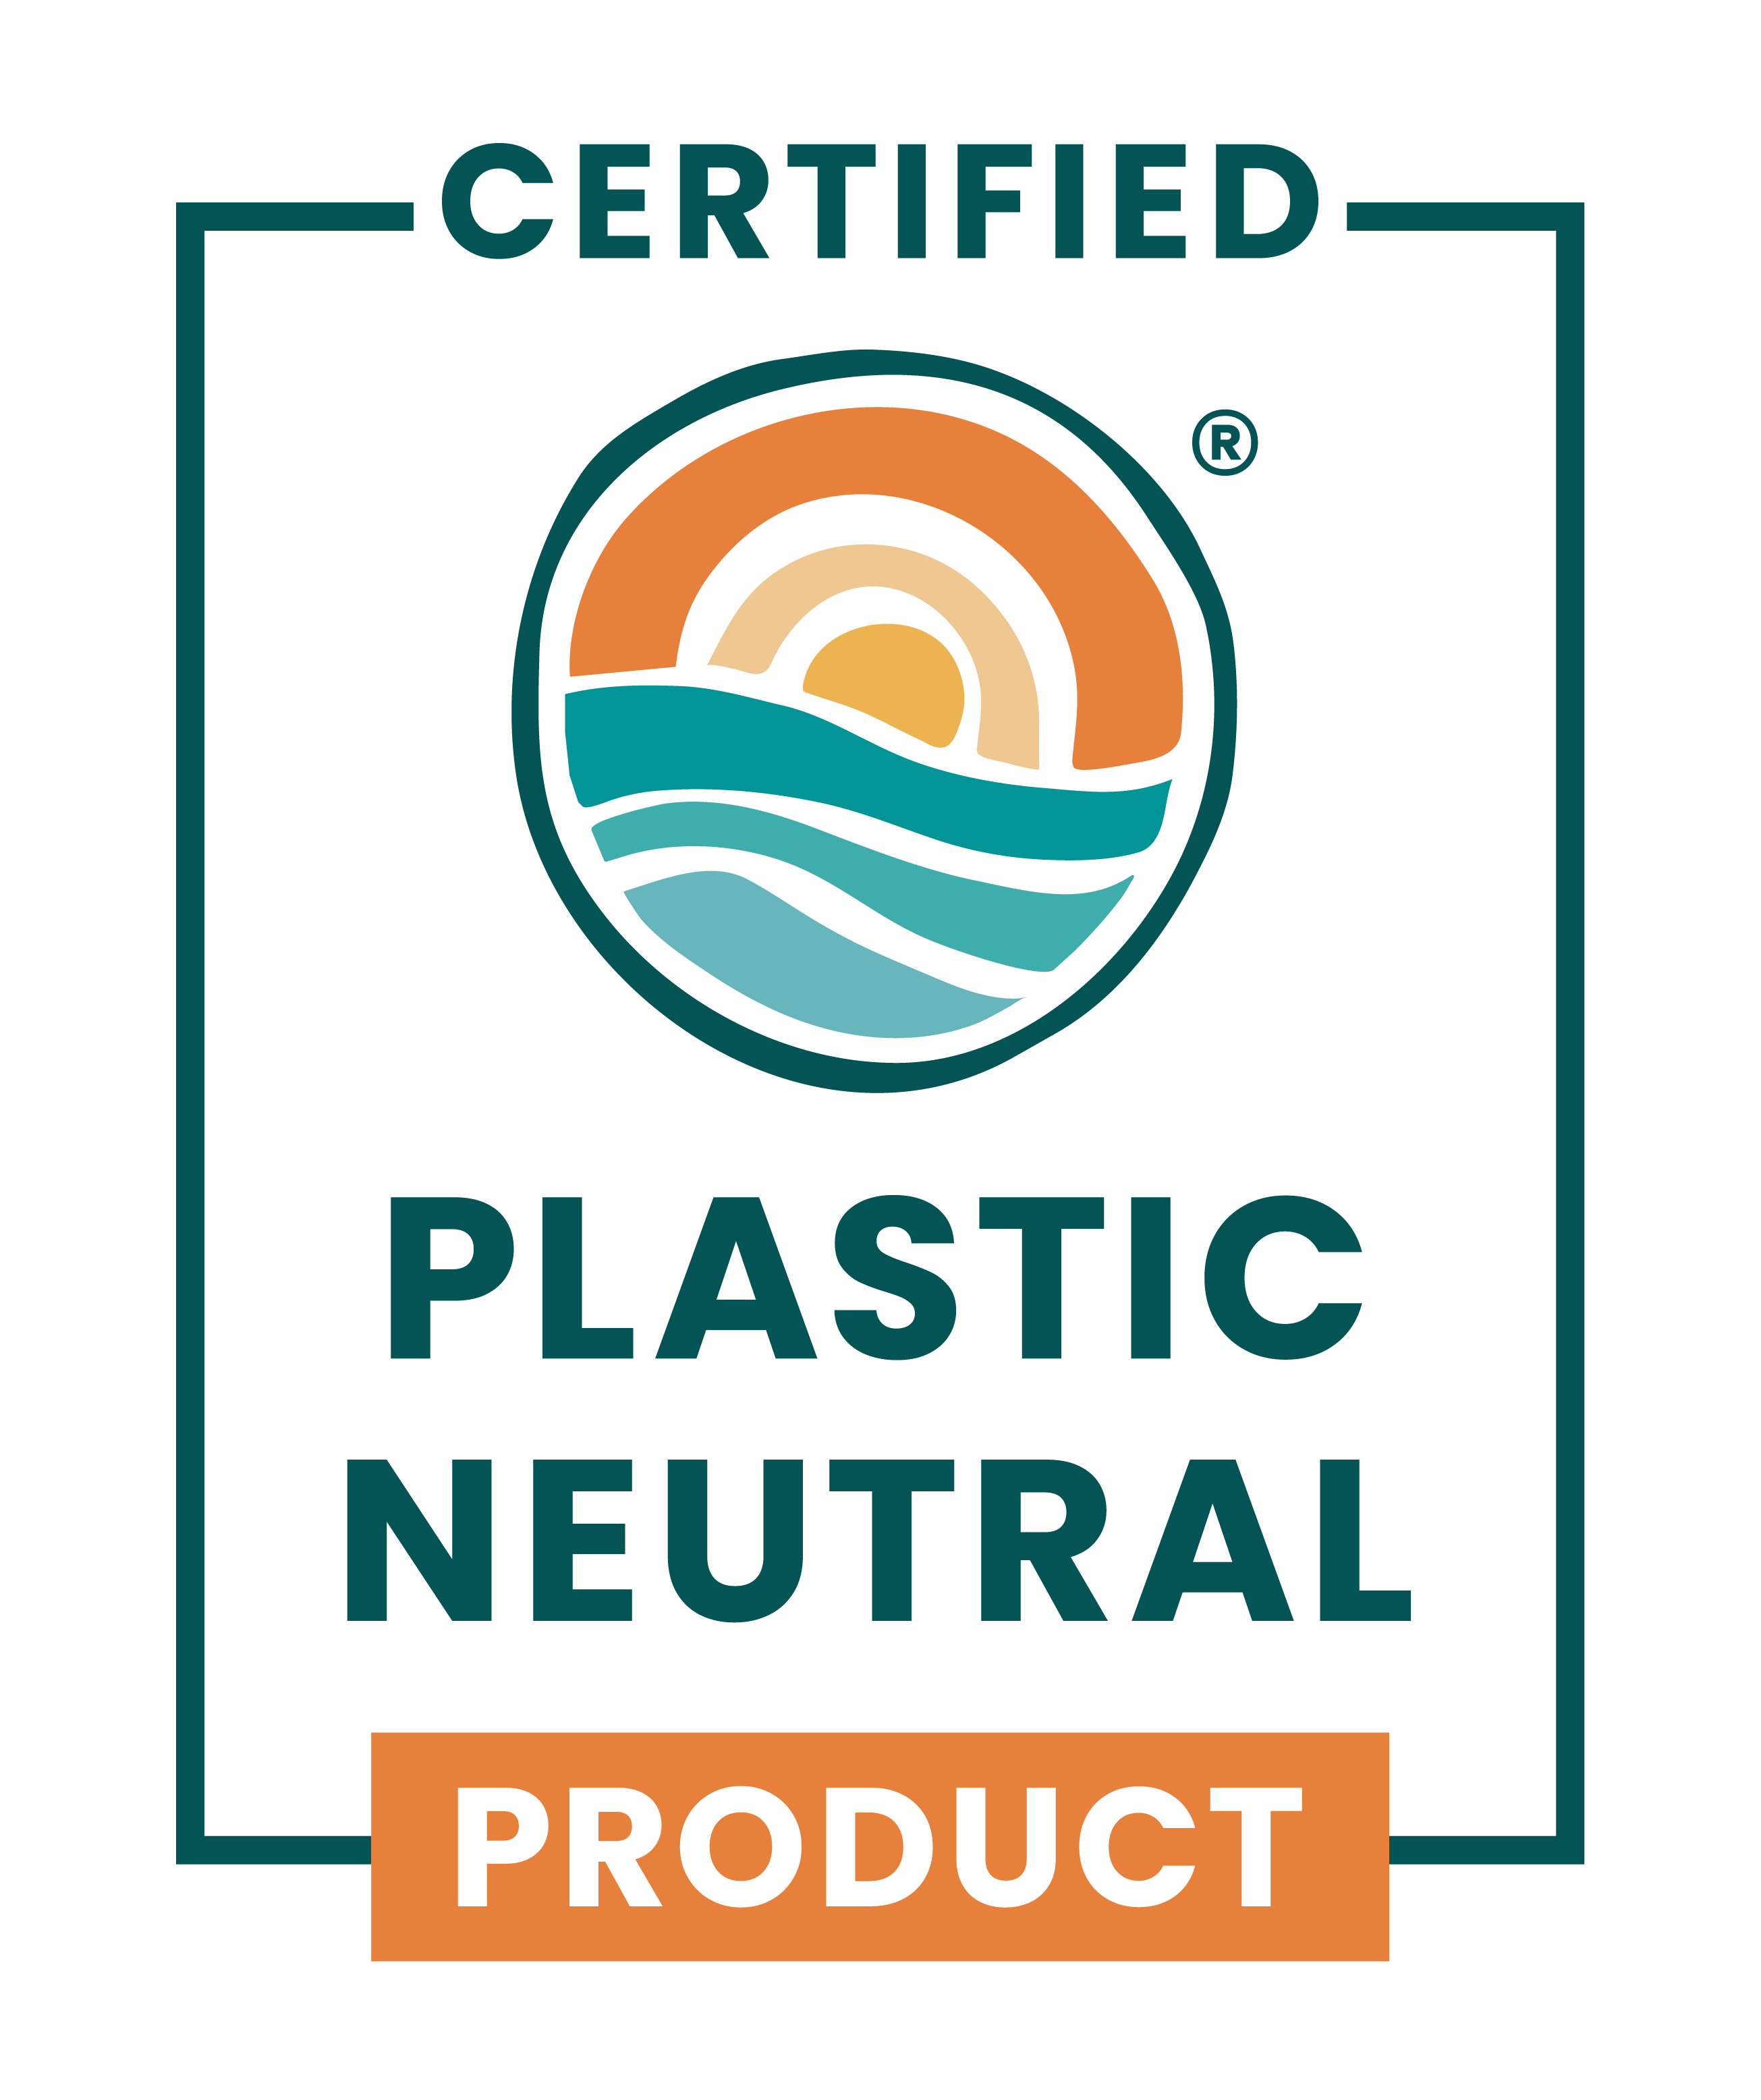 Plastic NEUTRAL